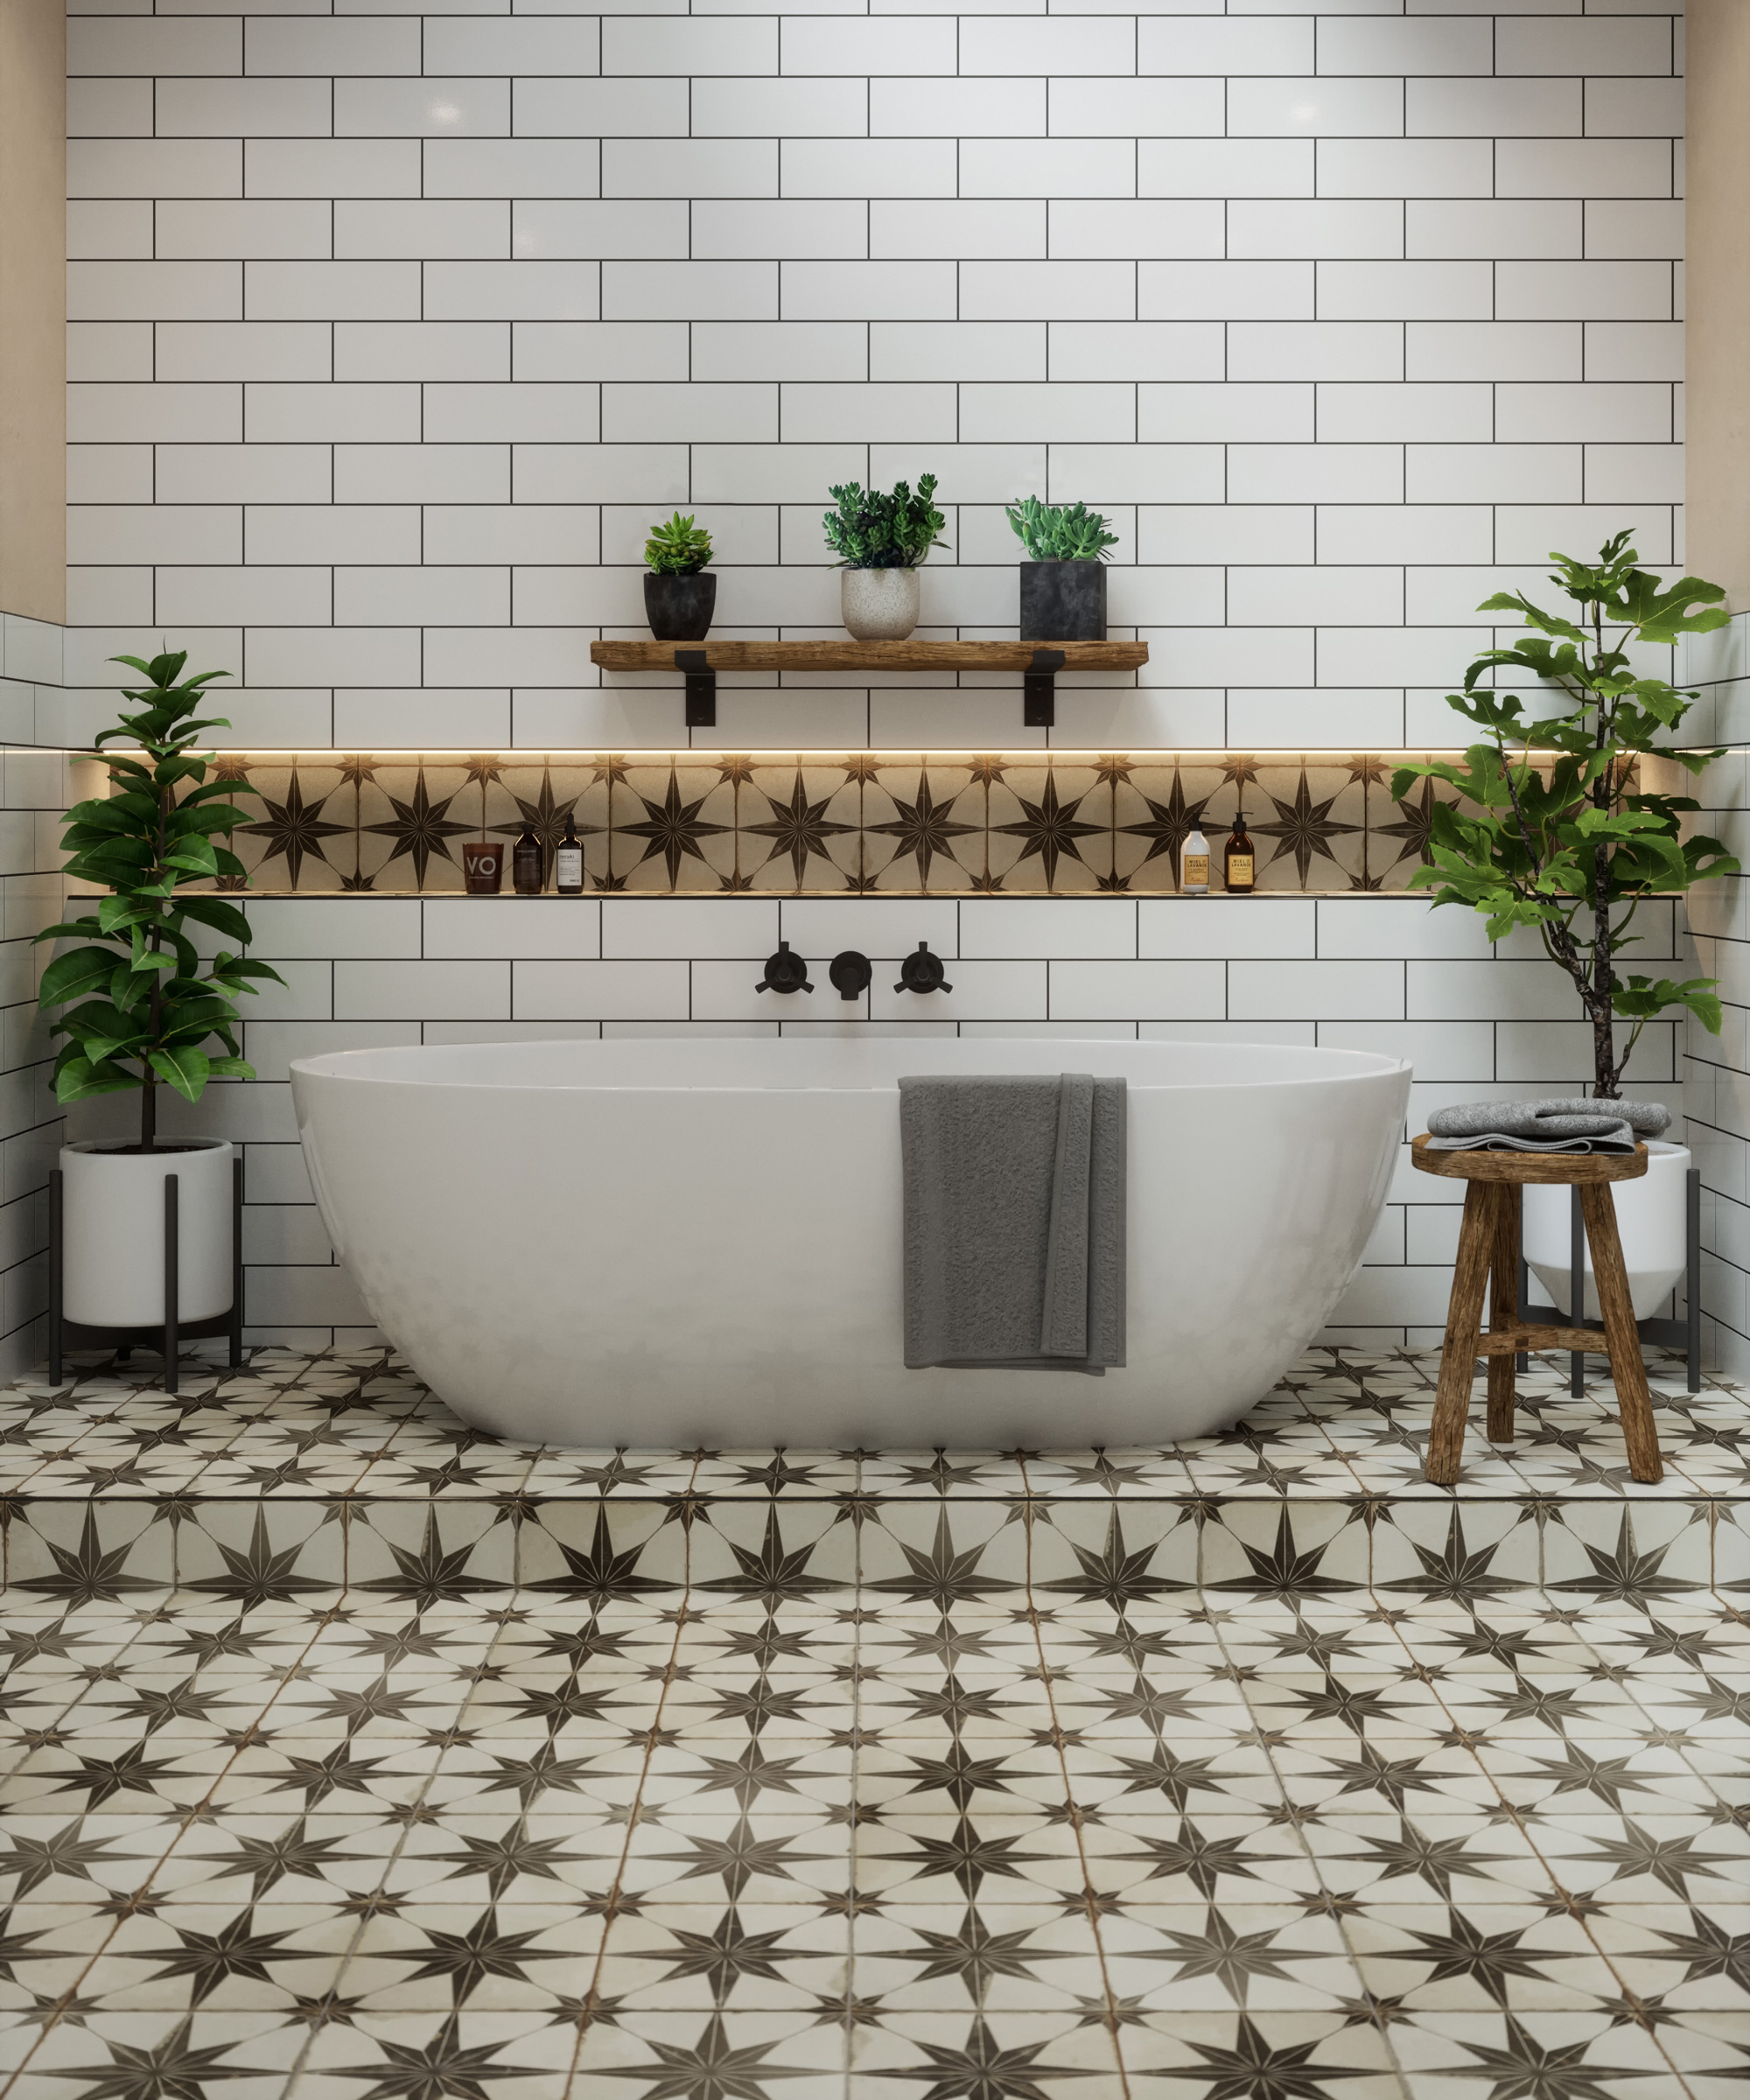 Bathroom Tile Ideas 32 New Looks To, Classic Bathroom Floor Tile Ideas